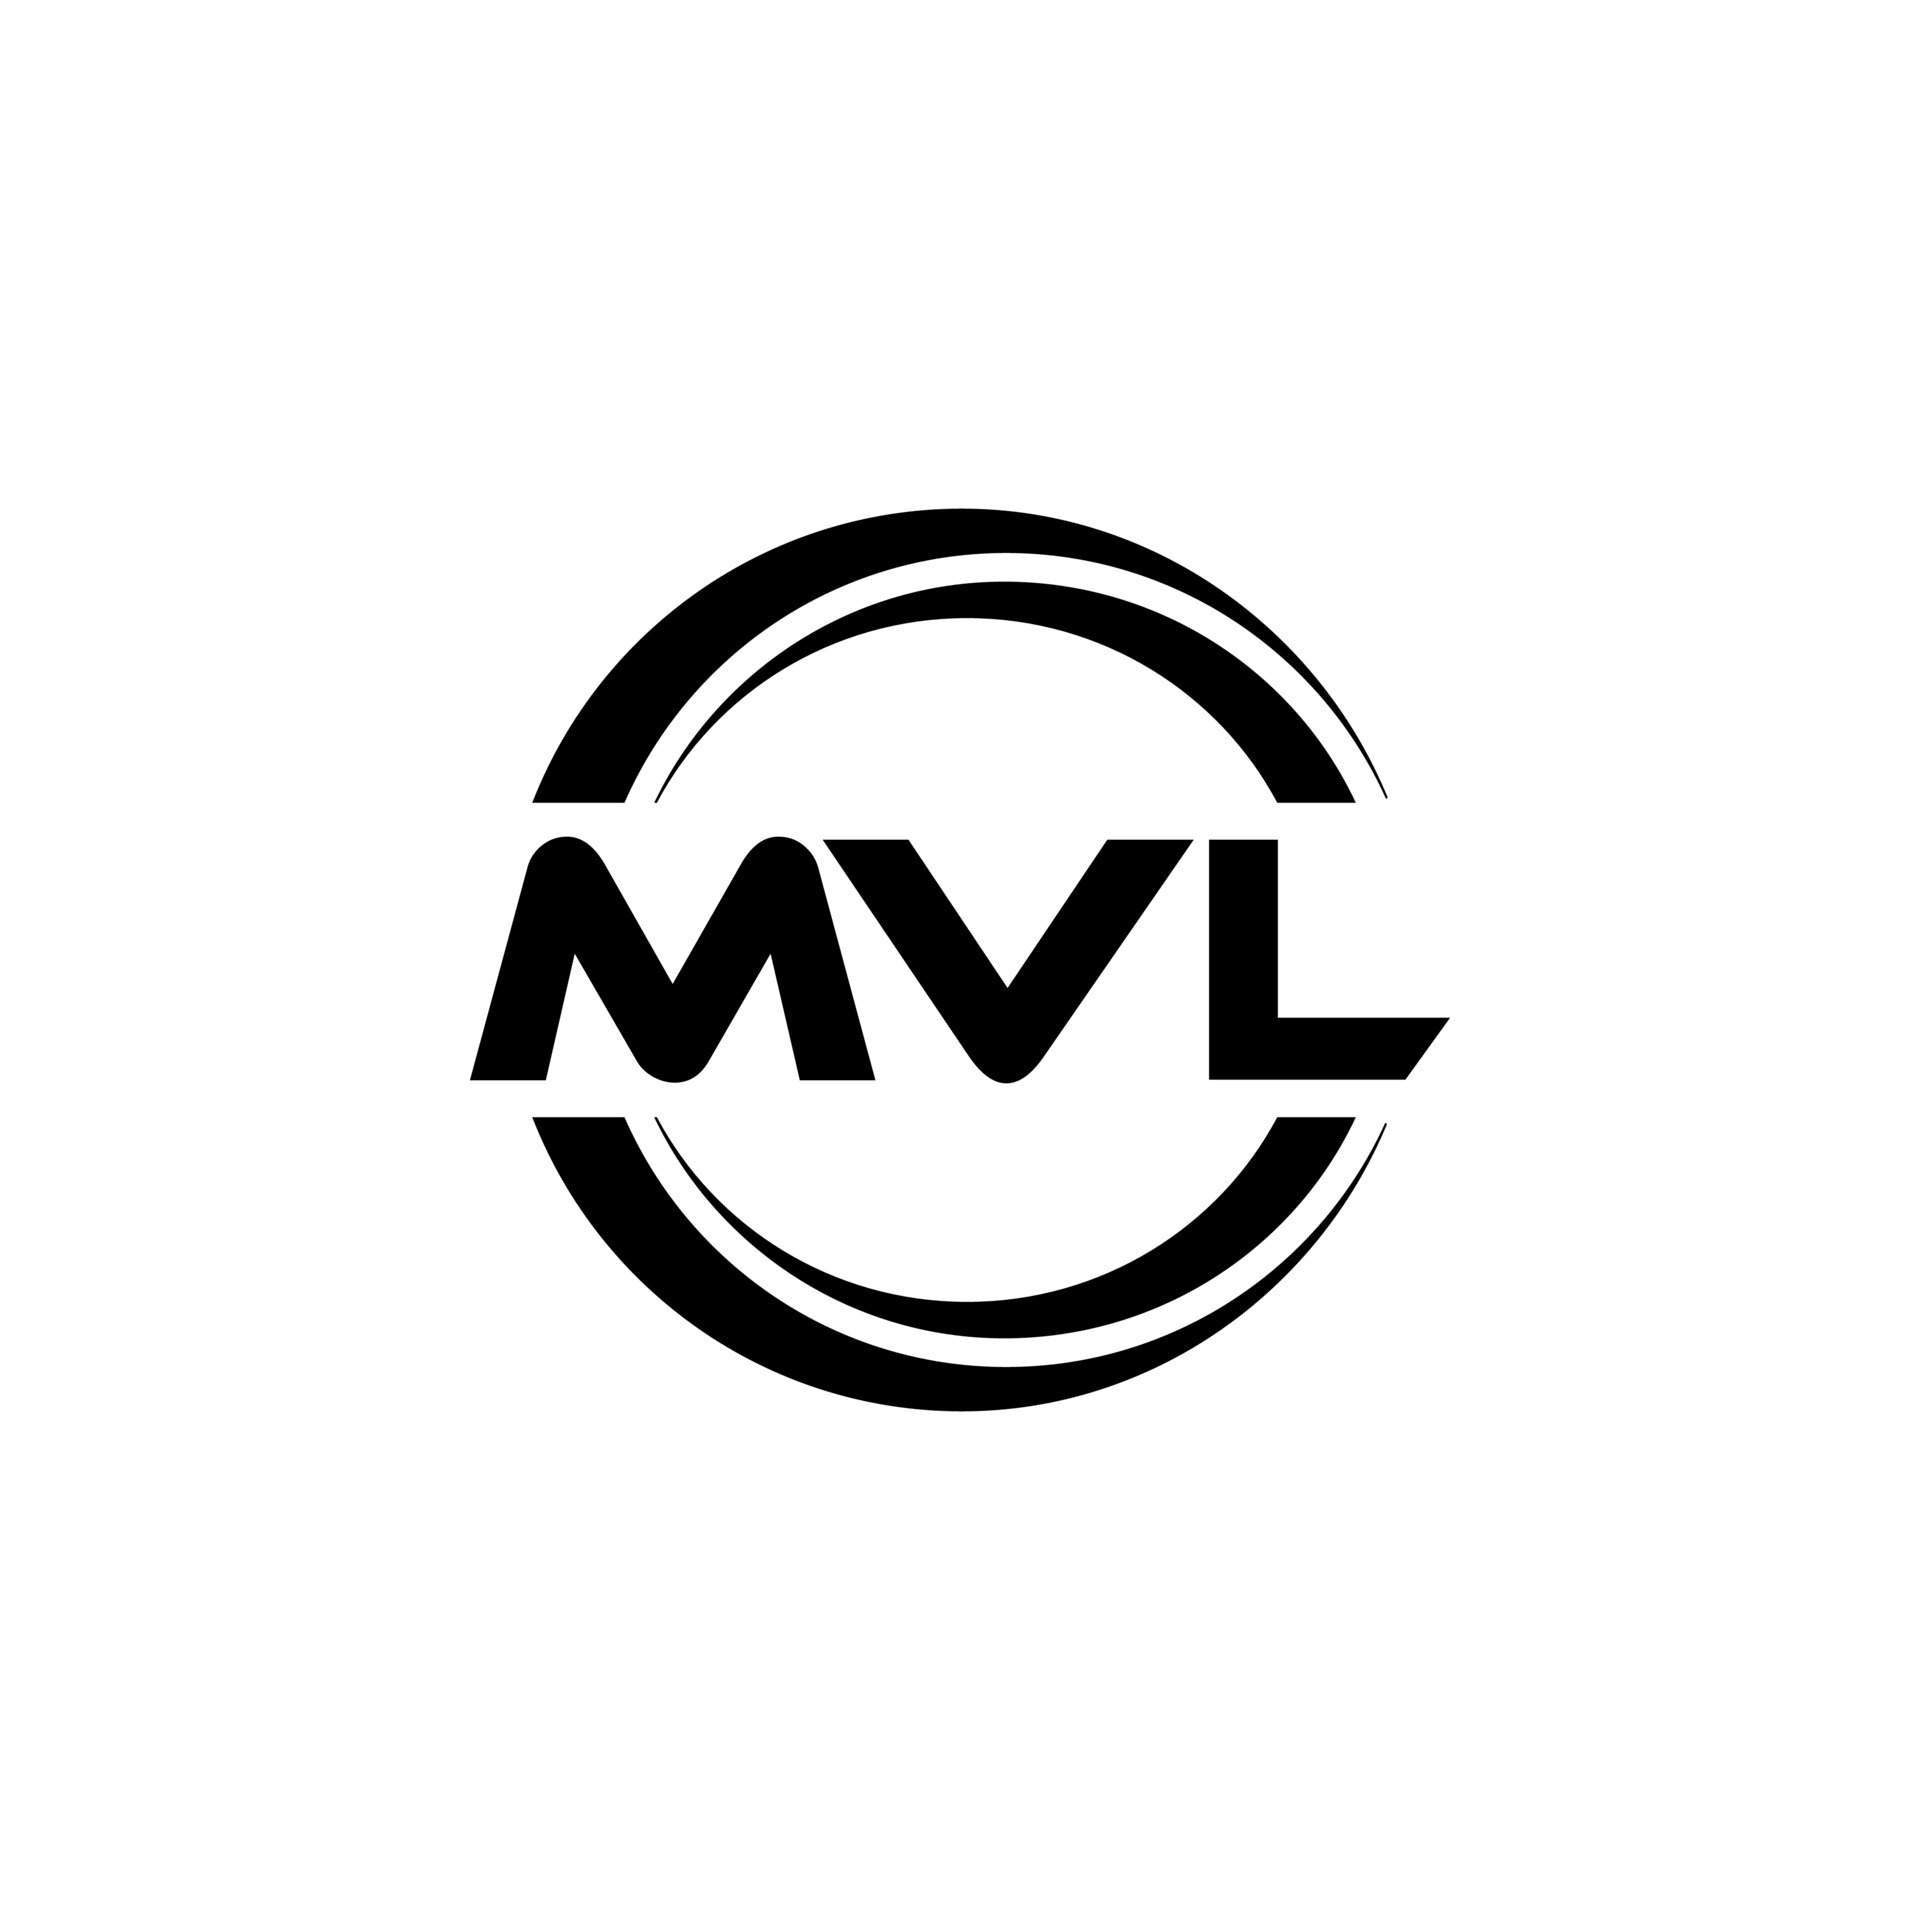 MVL letter logo design in illustration. Vector logo, calligraphy designs  for logo, Poster, Invitation, etc. 15030768 Vector Art at Vecteezy